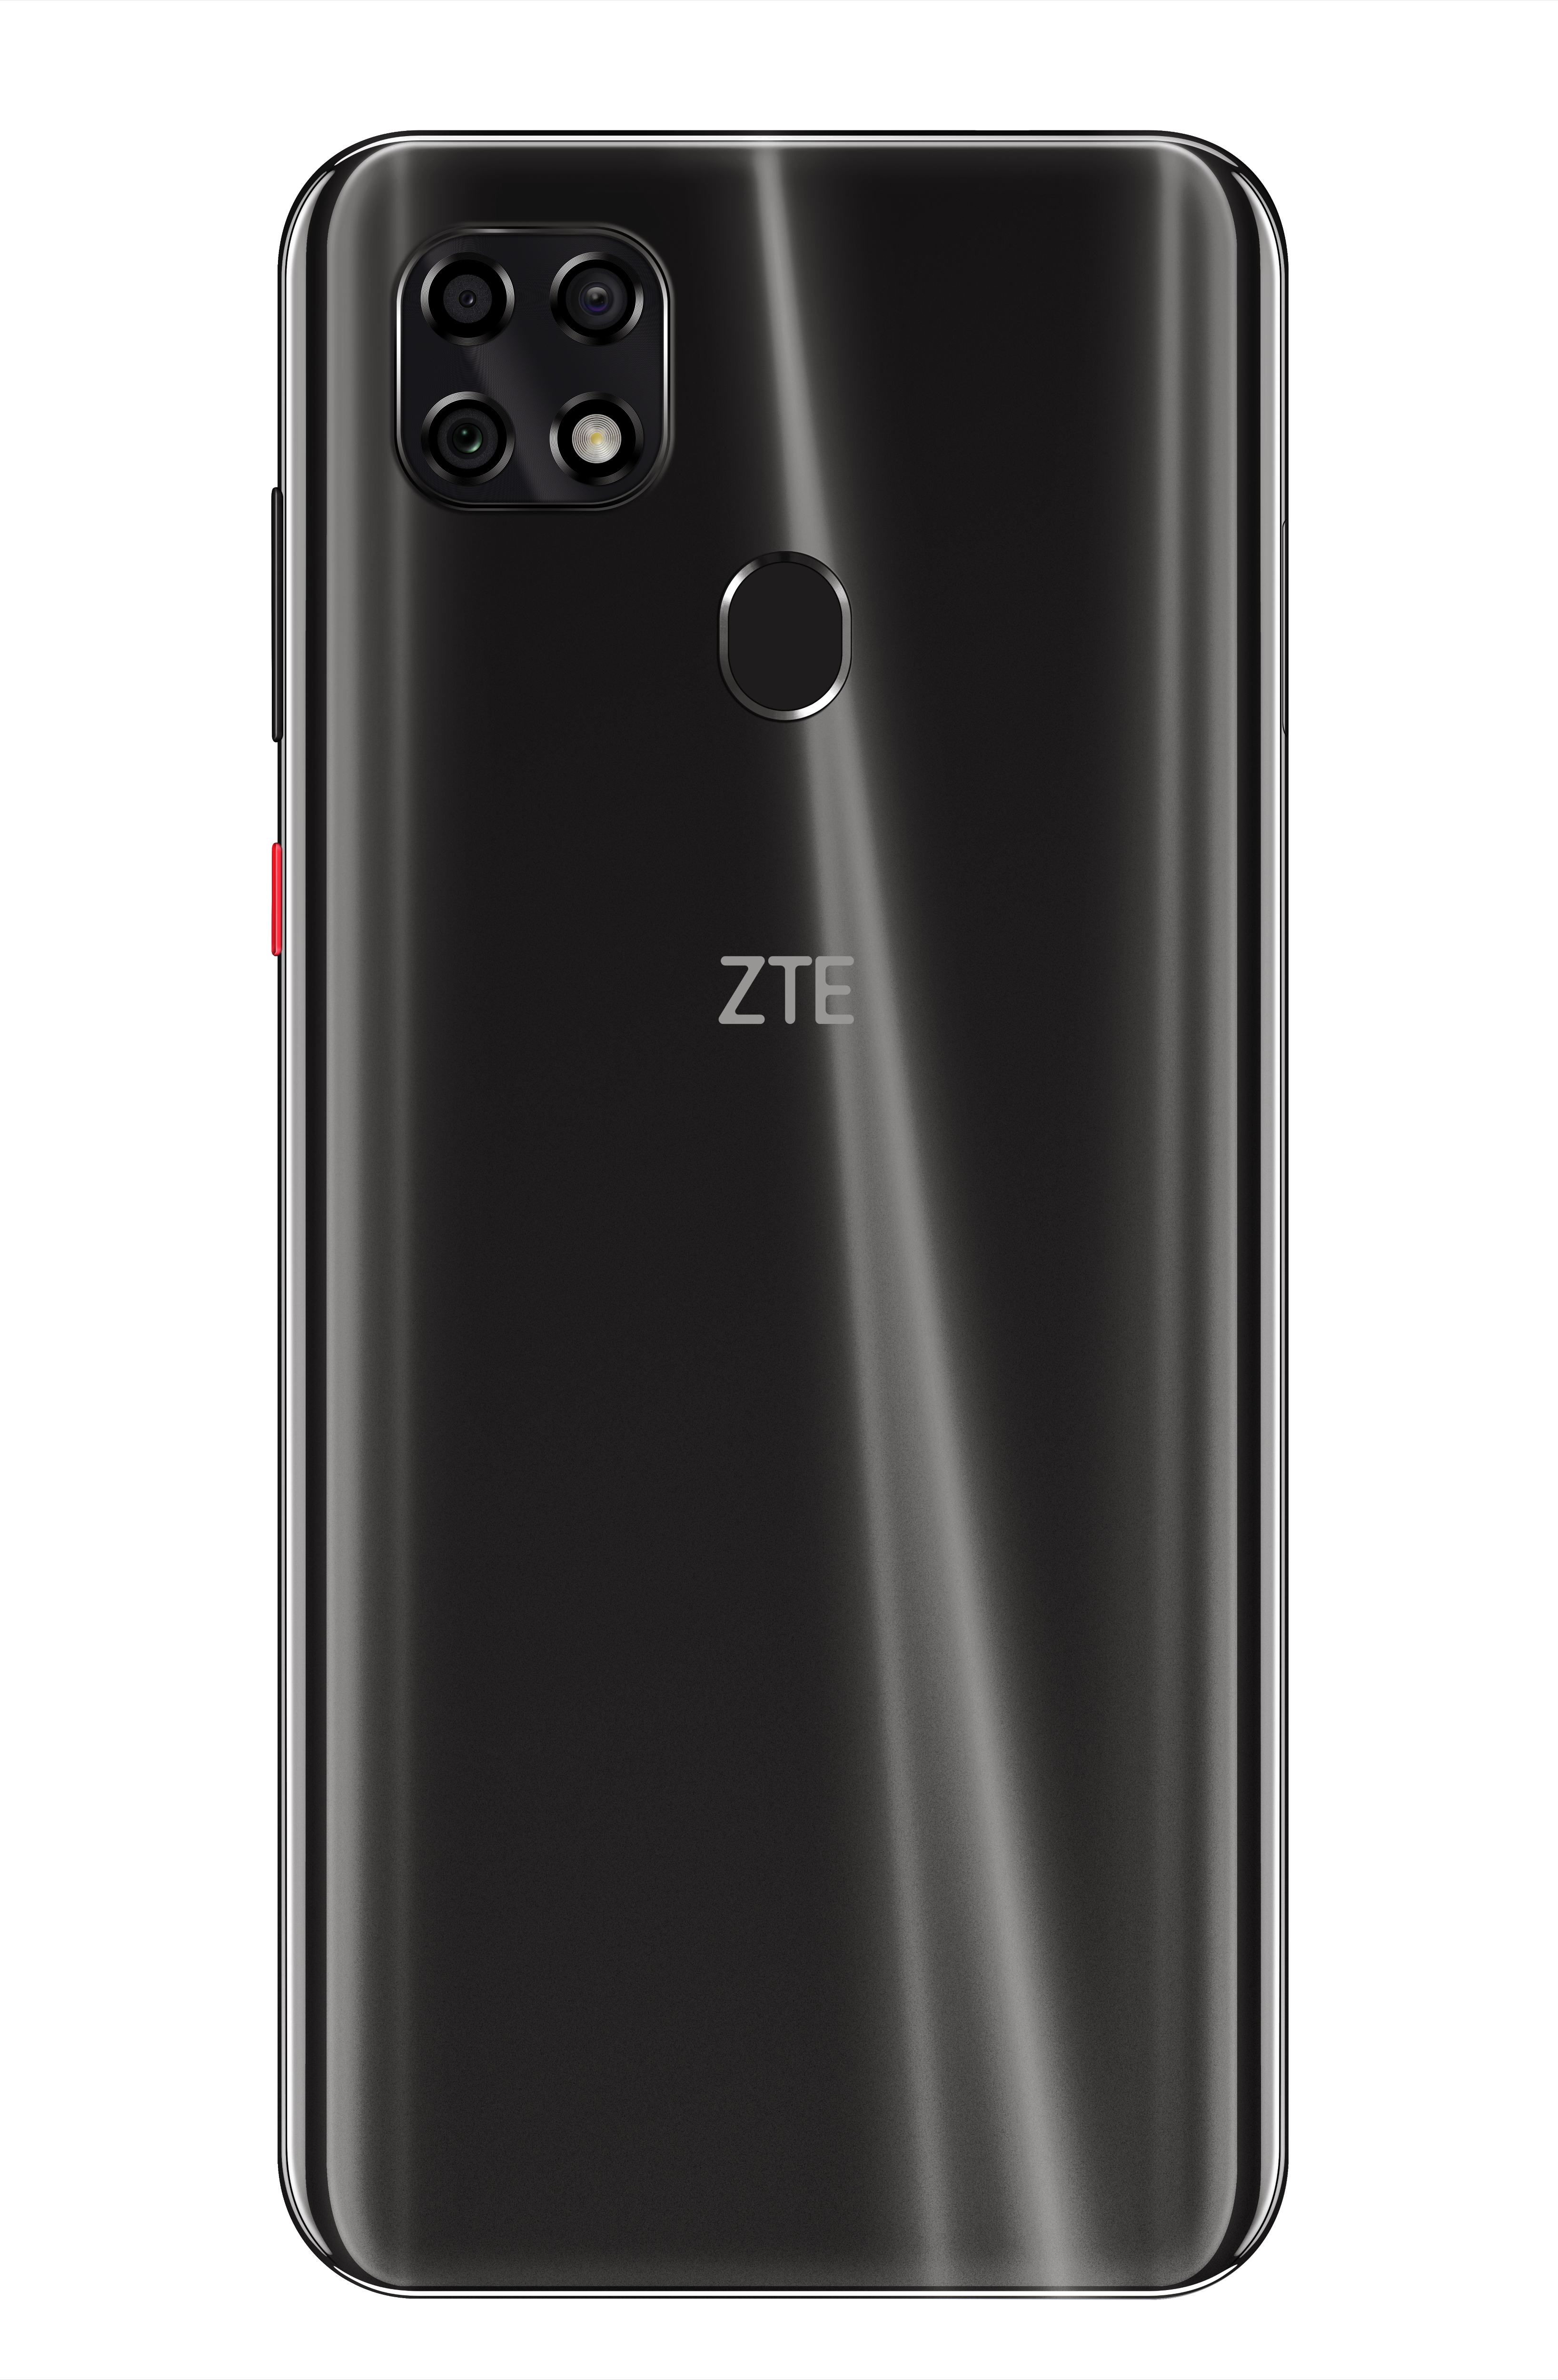 10 ZTE GB 128 SIM Black Blade Dual Smart